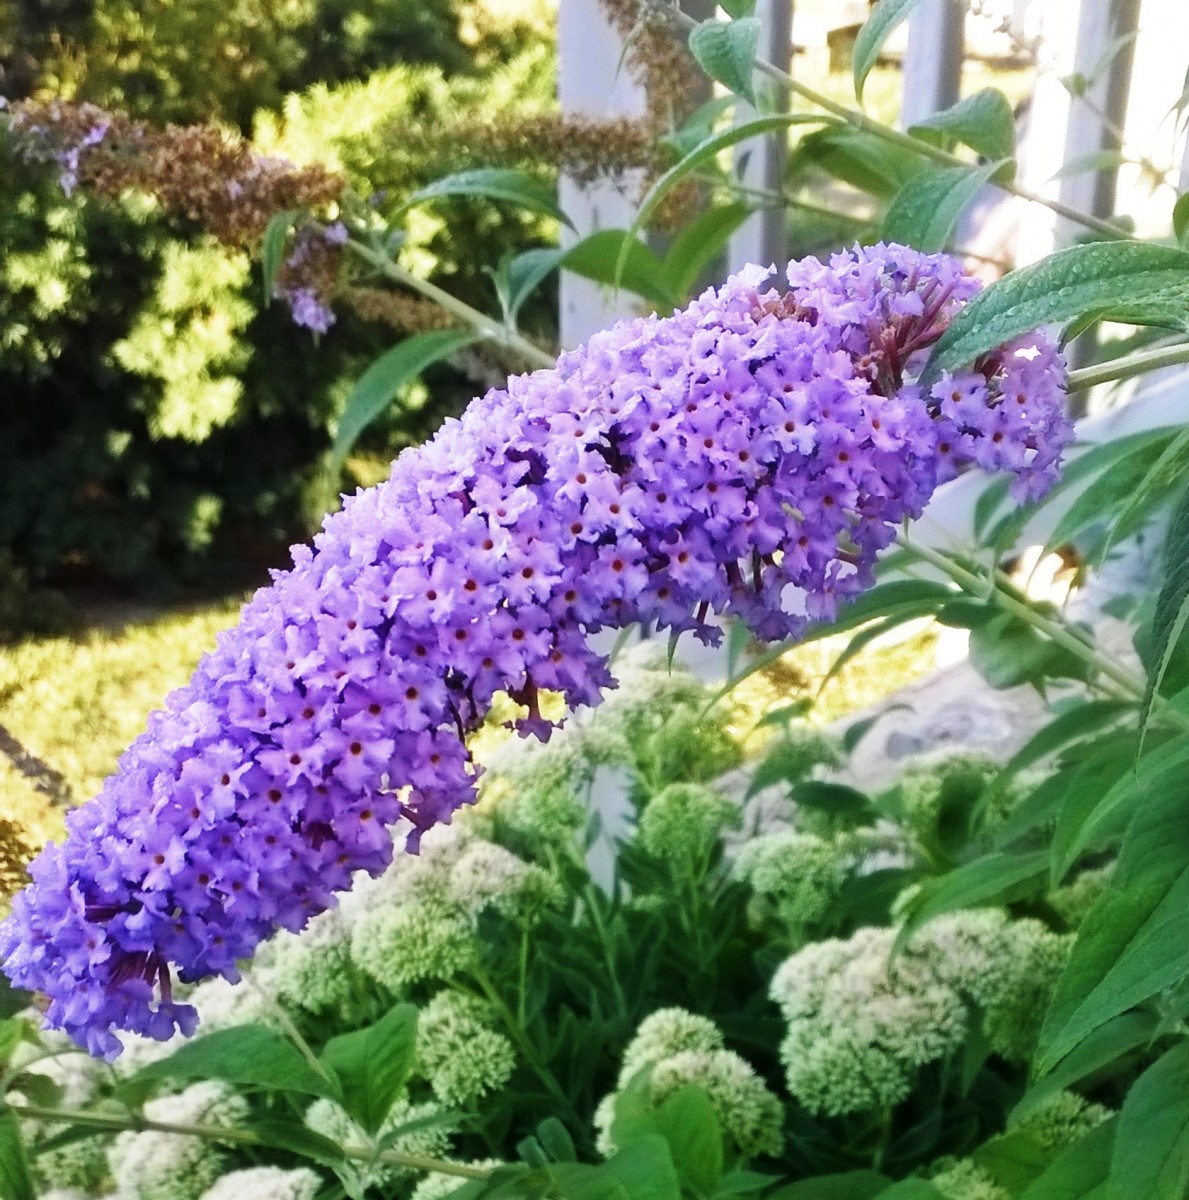 Butterfly Bush Purple Gardenland USA - Improve Your Environment!